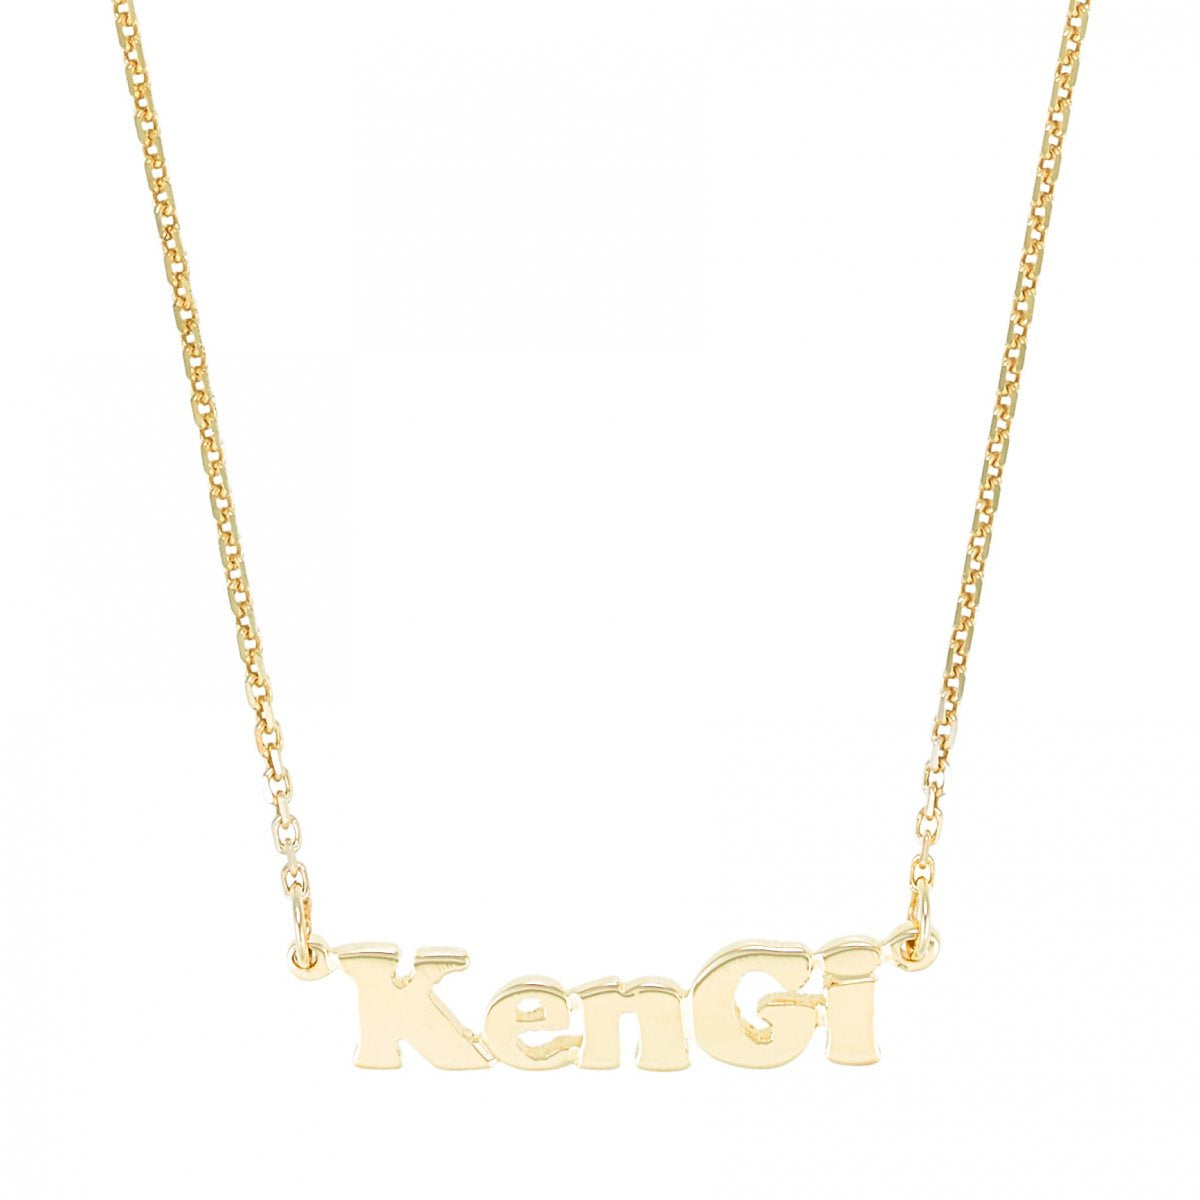 Mini Me Friendship - 14K Gold Personalized Custom Necklace - Lola James Jewelry 